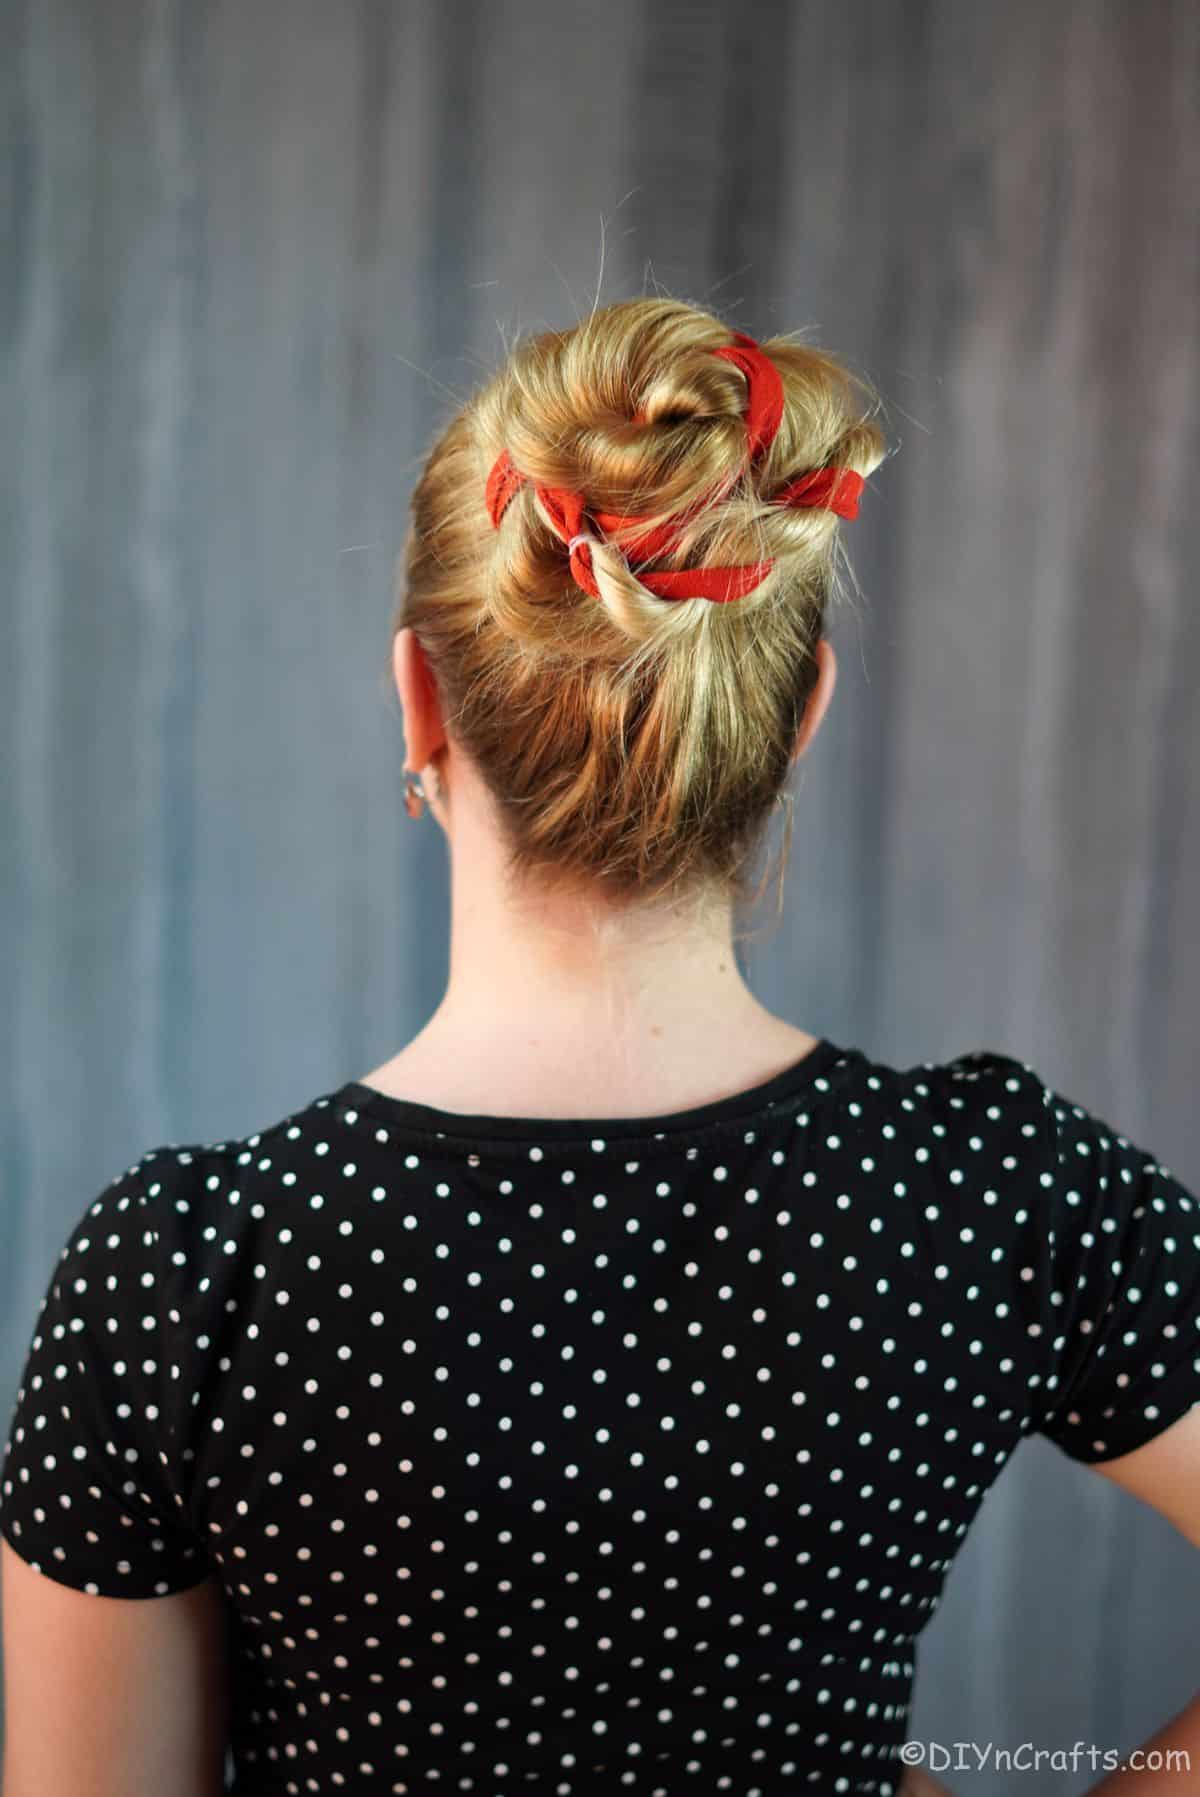 red ribbon twisted through braids on bun